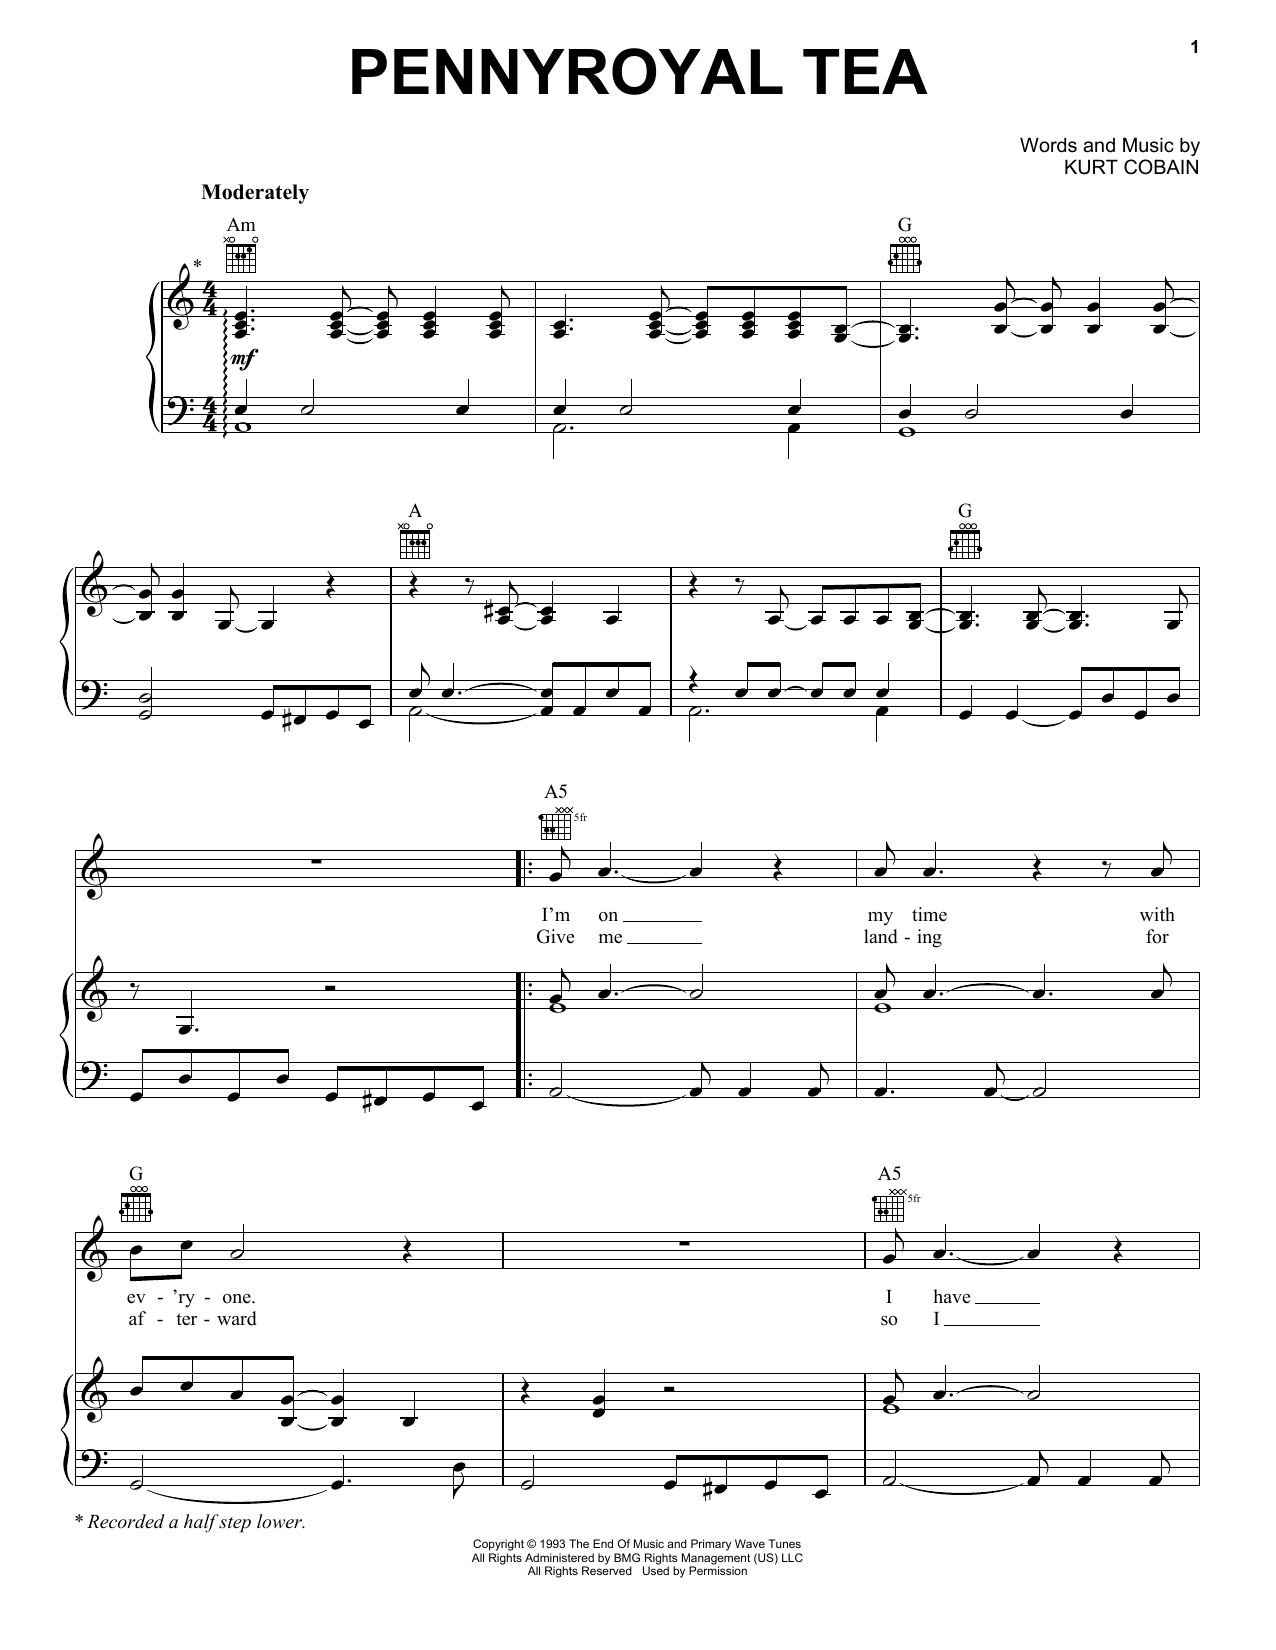 Nirvana Pennyroyal Tea Sheet Music Notes & Chords for Guitar Tab - Download or Print PDF